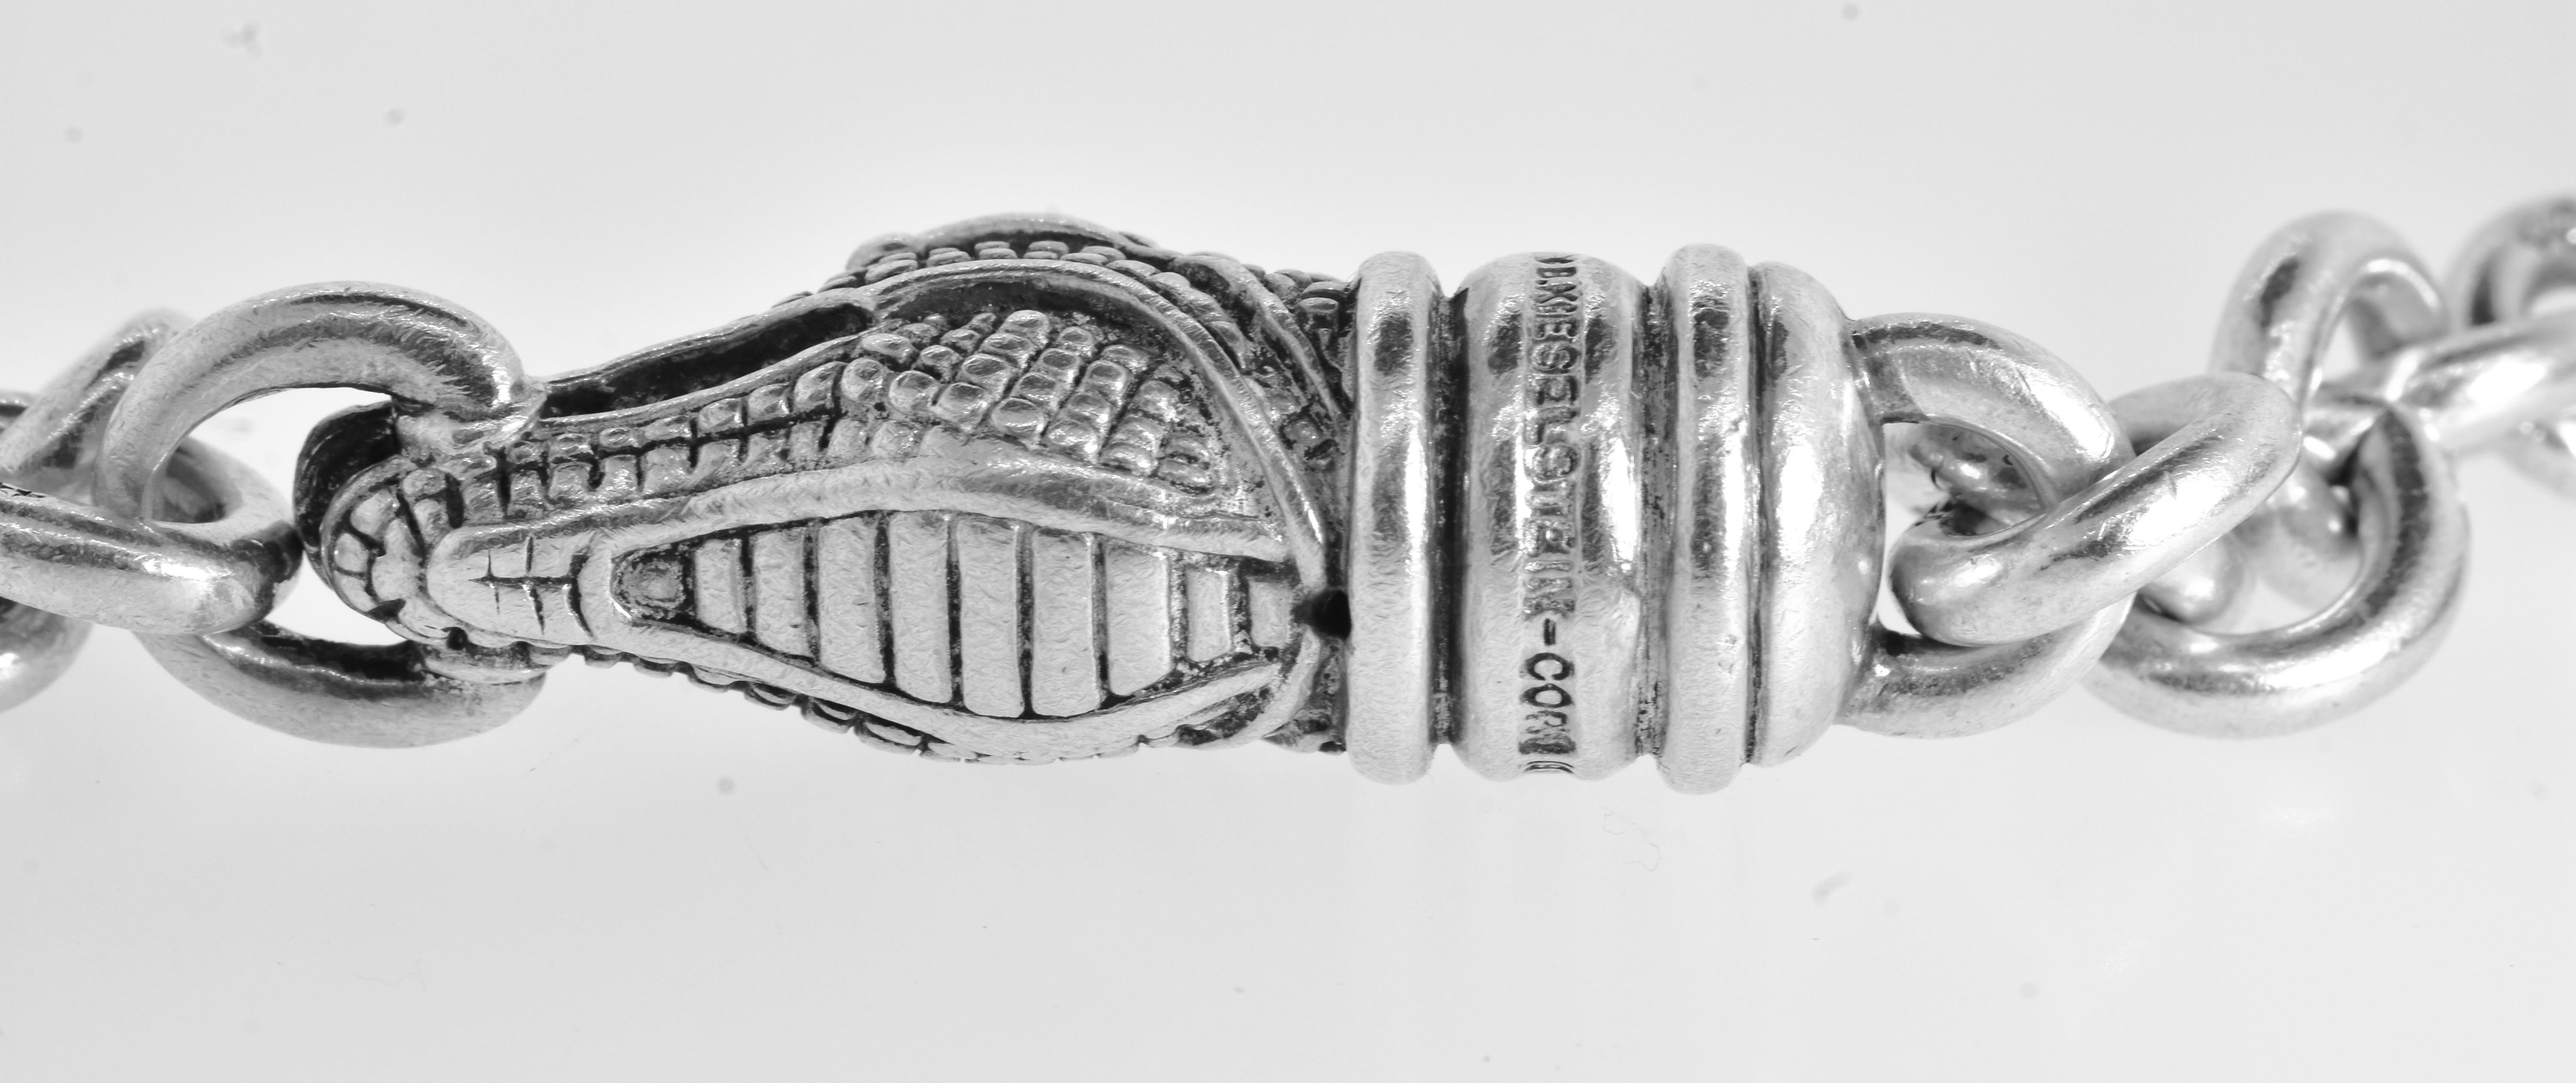 Kieselstein-Cord Sterling Silver Link Alligator Vintage Bracelet, circa 1995 For Sale 1